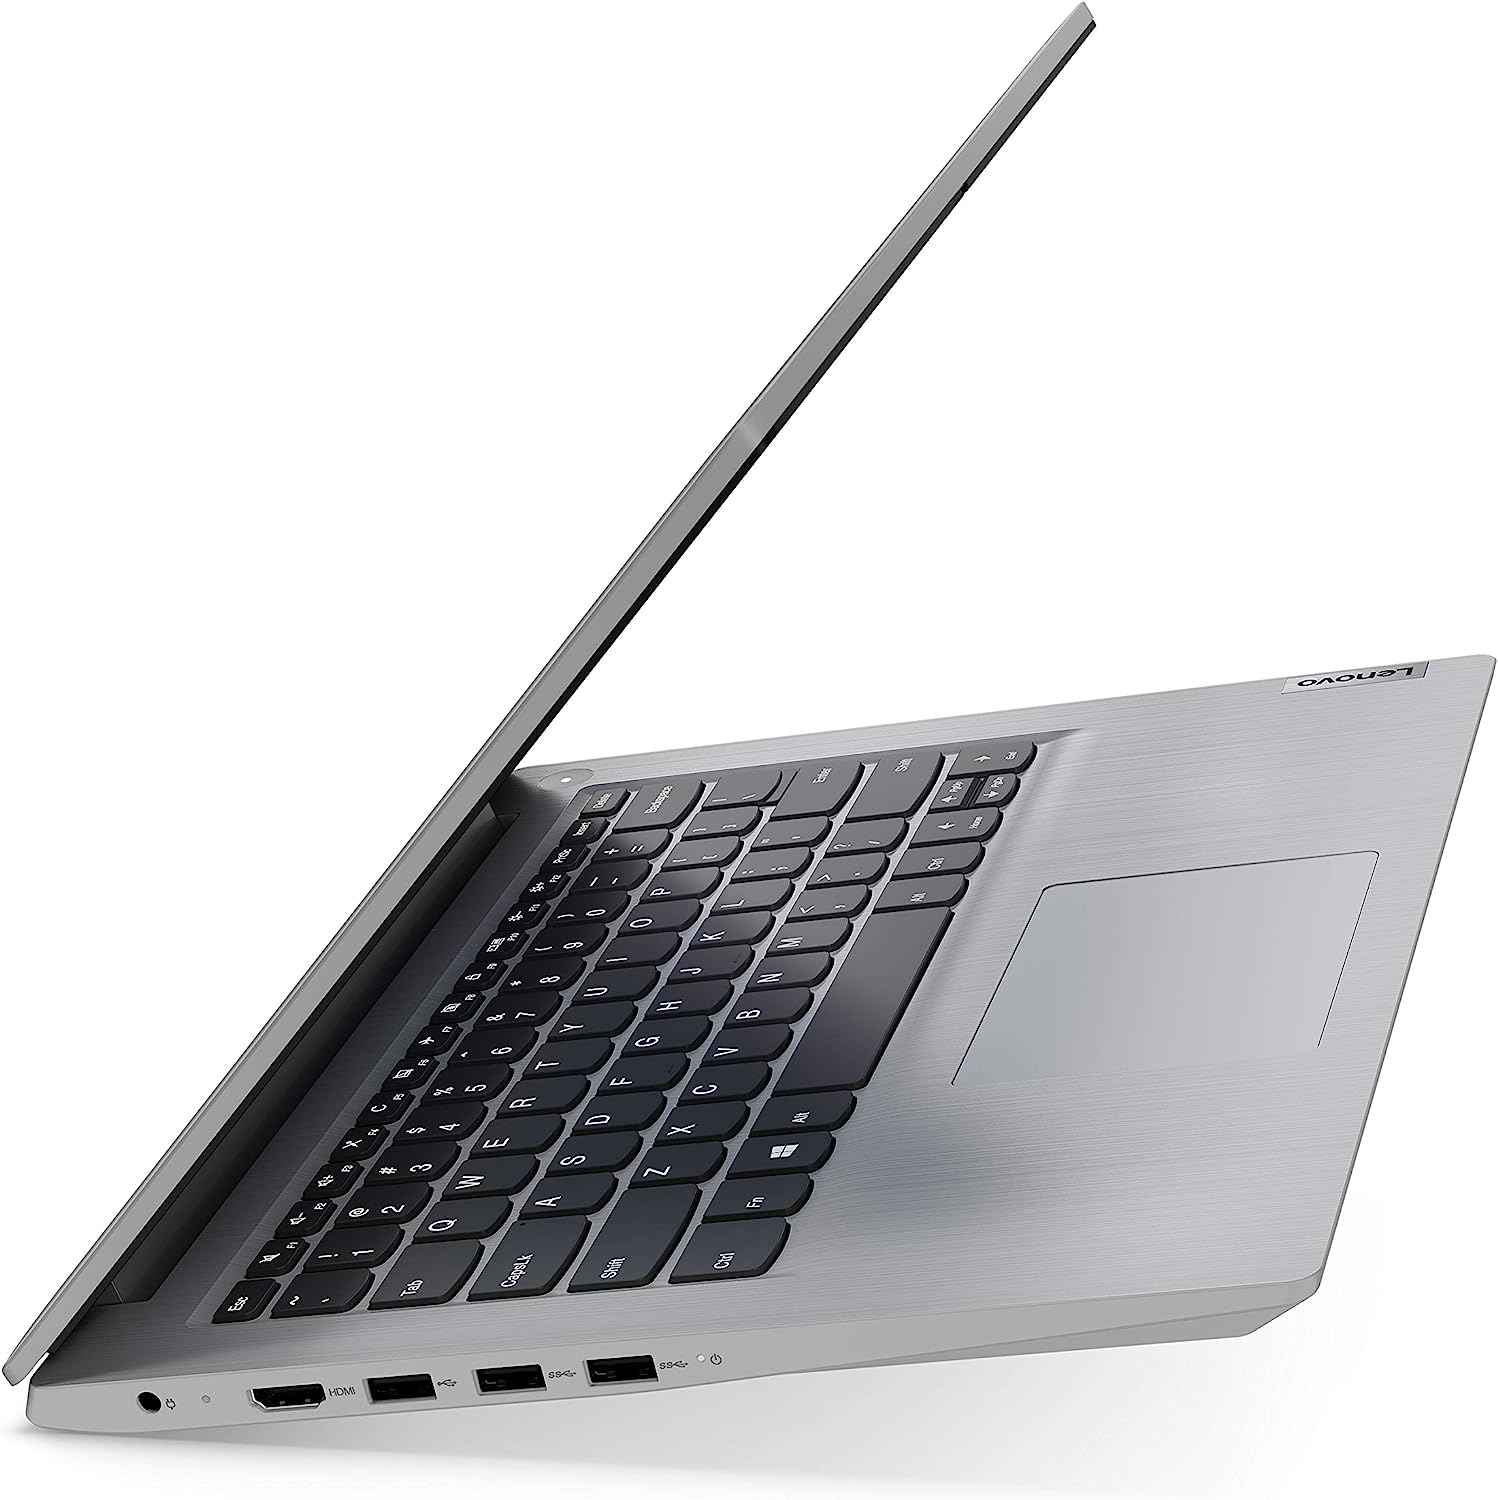 Laptop Lenovo 14IML05 i3 10110U,  2.1GHz, 10ma Gen,  Ram 8Gb, Disco SSD 256Gb NVMe, Display 14"FHD, teclado español, DVD-RW, Webcam,  WIN10, color gris platino, Nuevo, 1 año de garantia